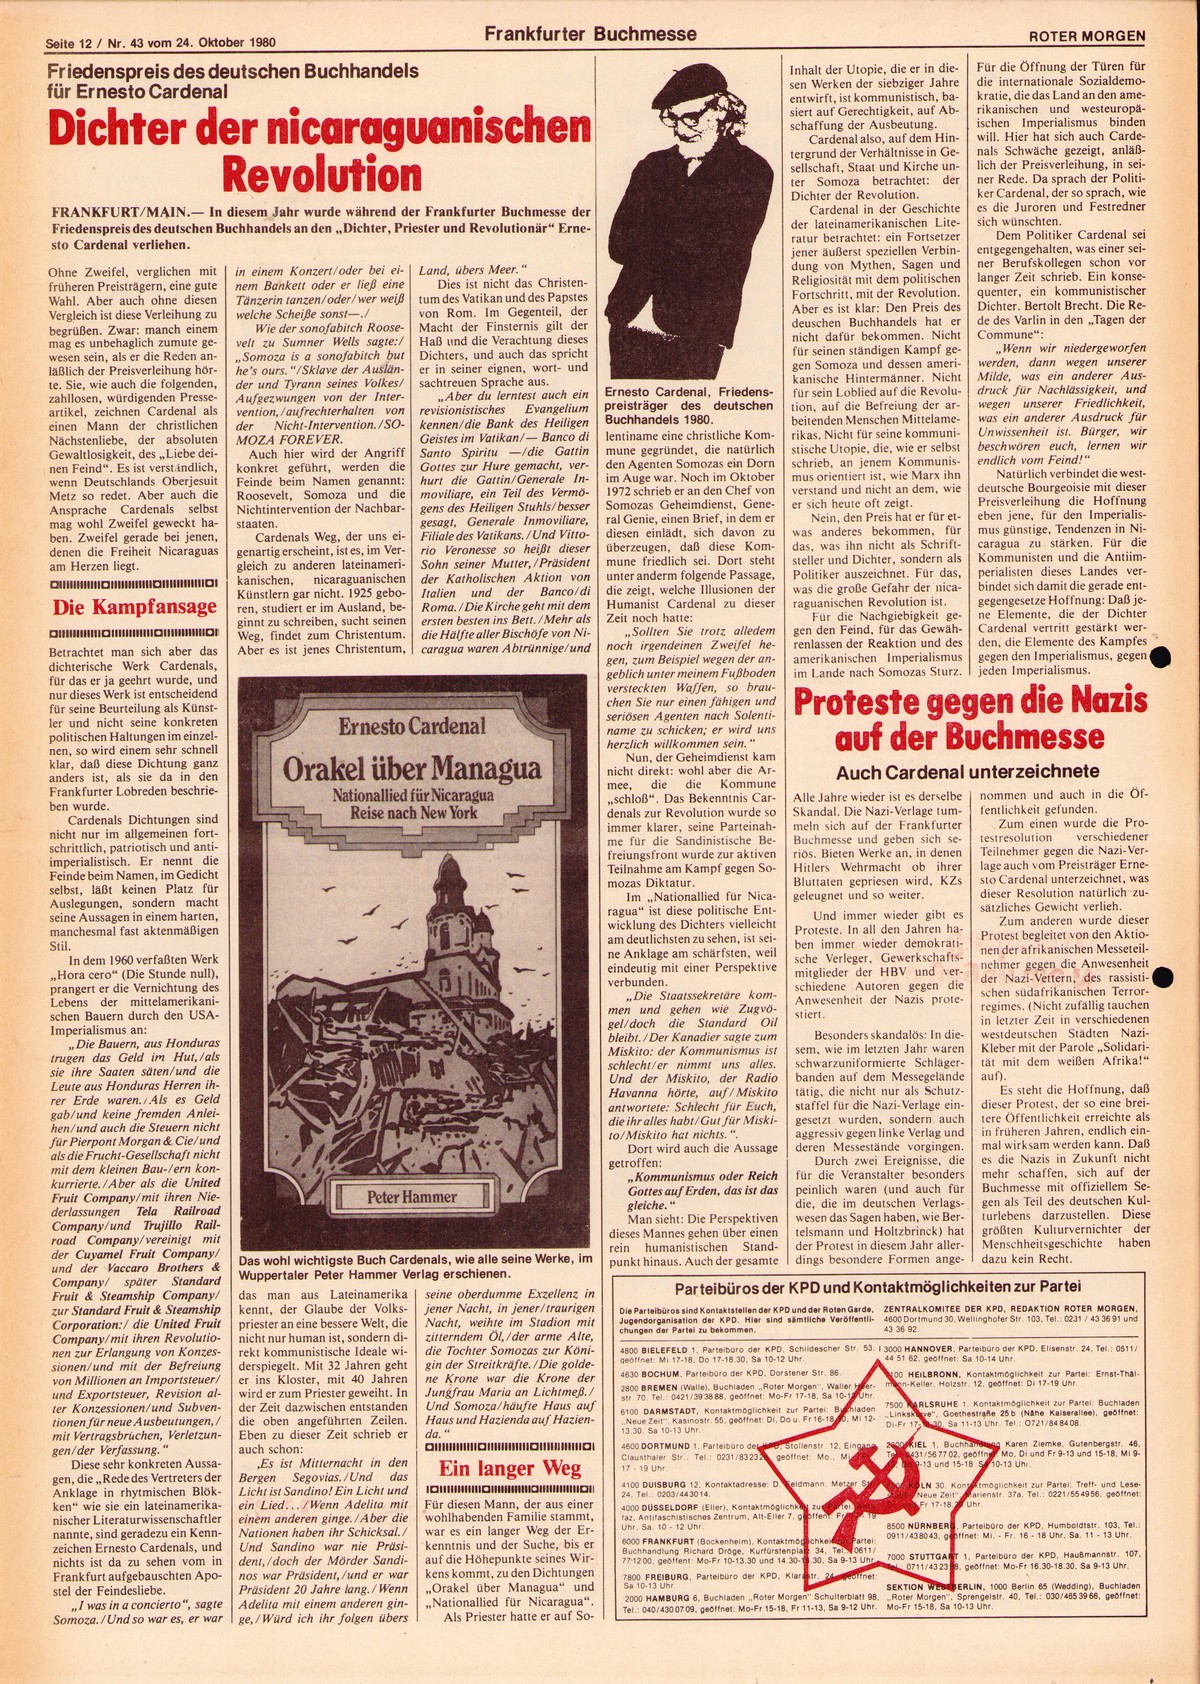 Roter Morgen, 14. Jg., 24. Oktobber 1980, Nr. 43, Seite 12